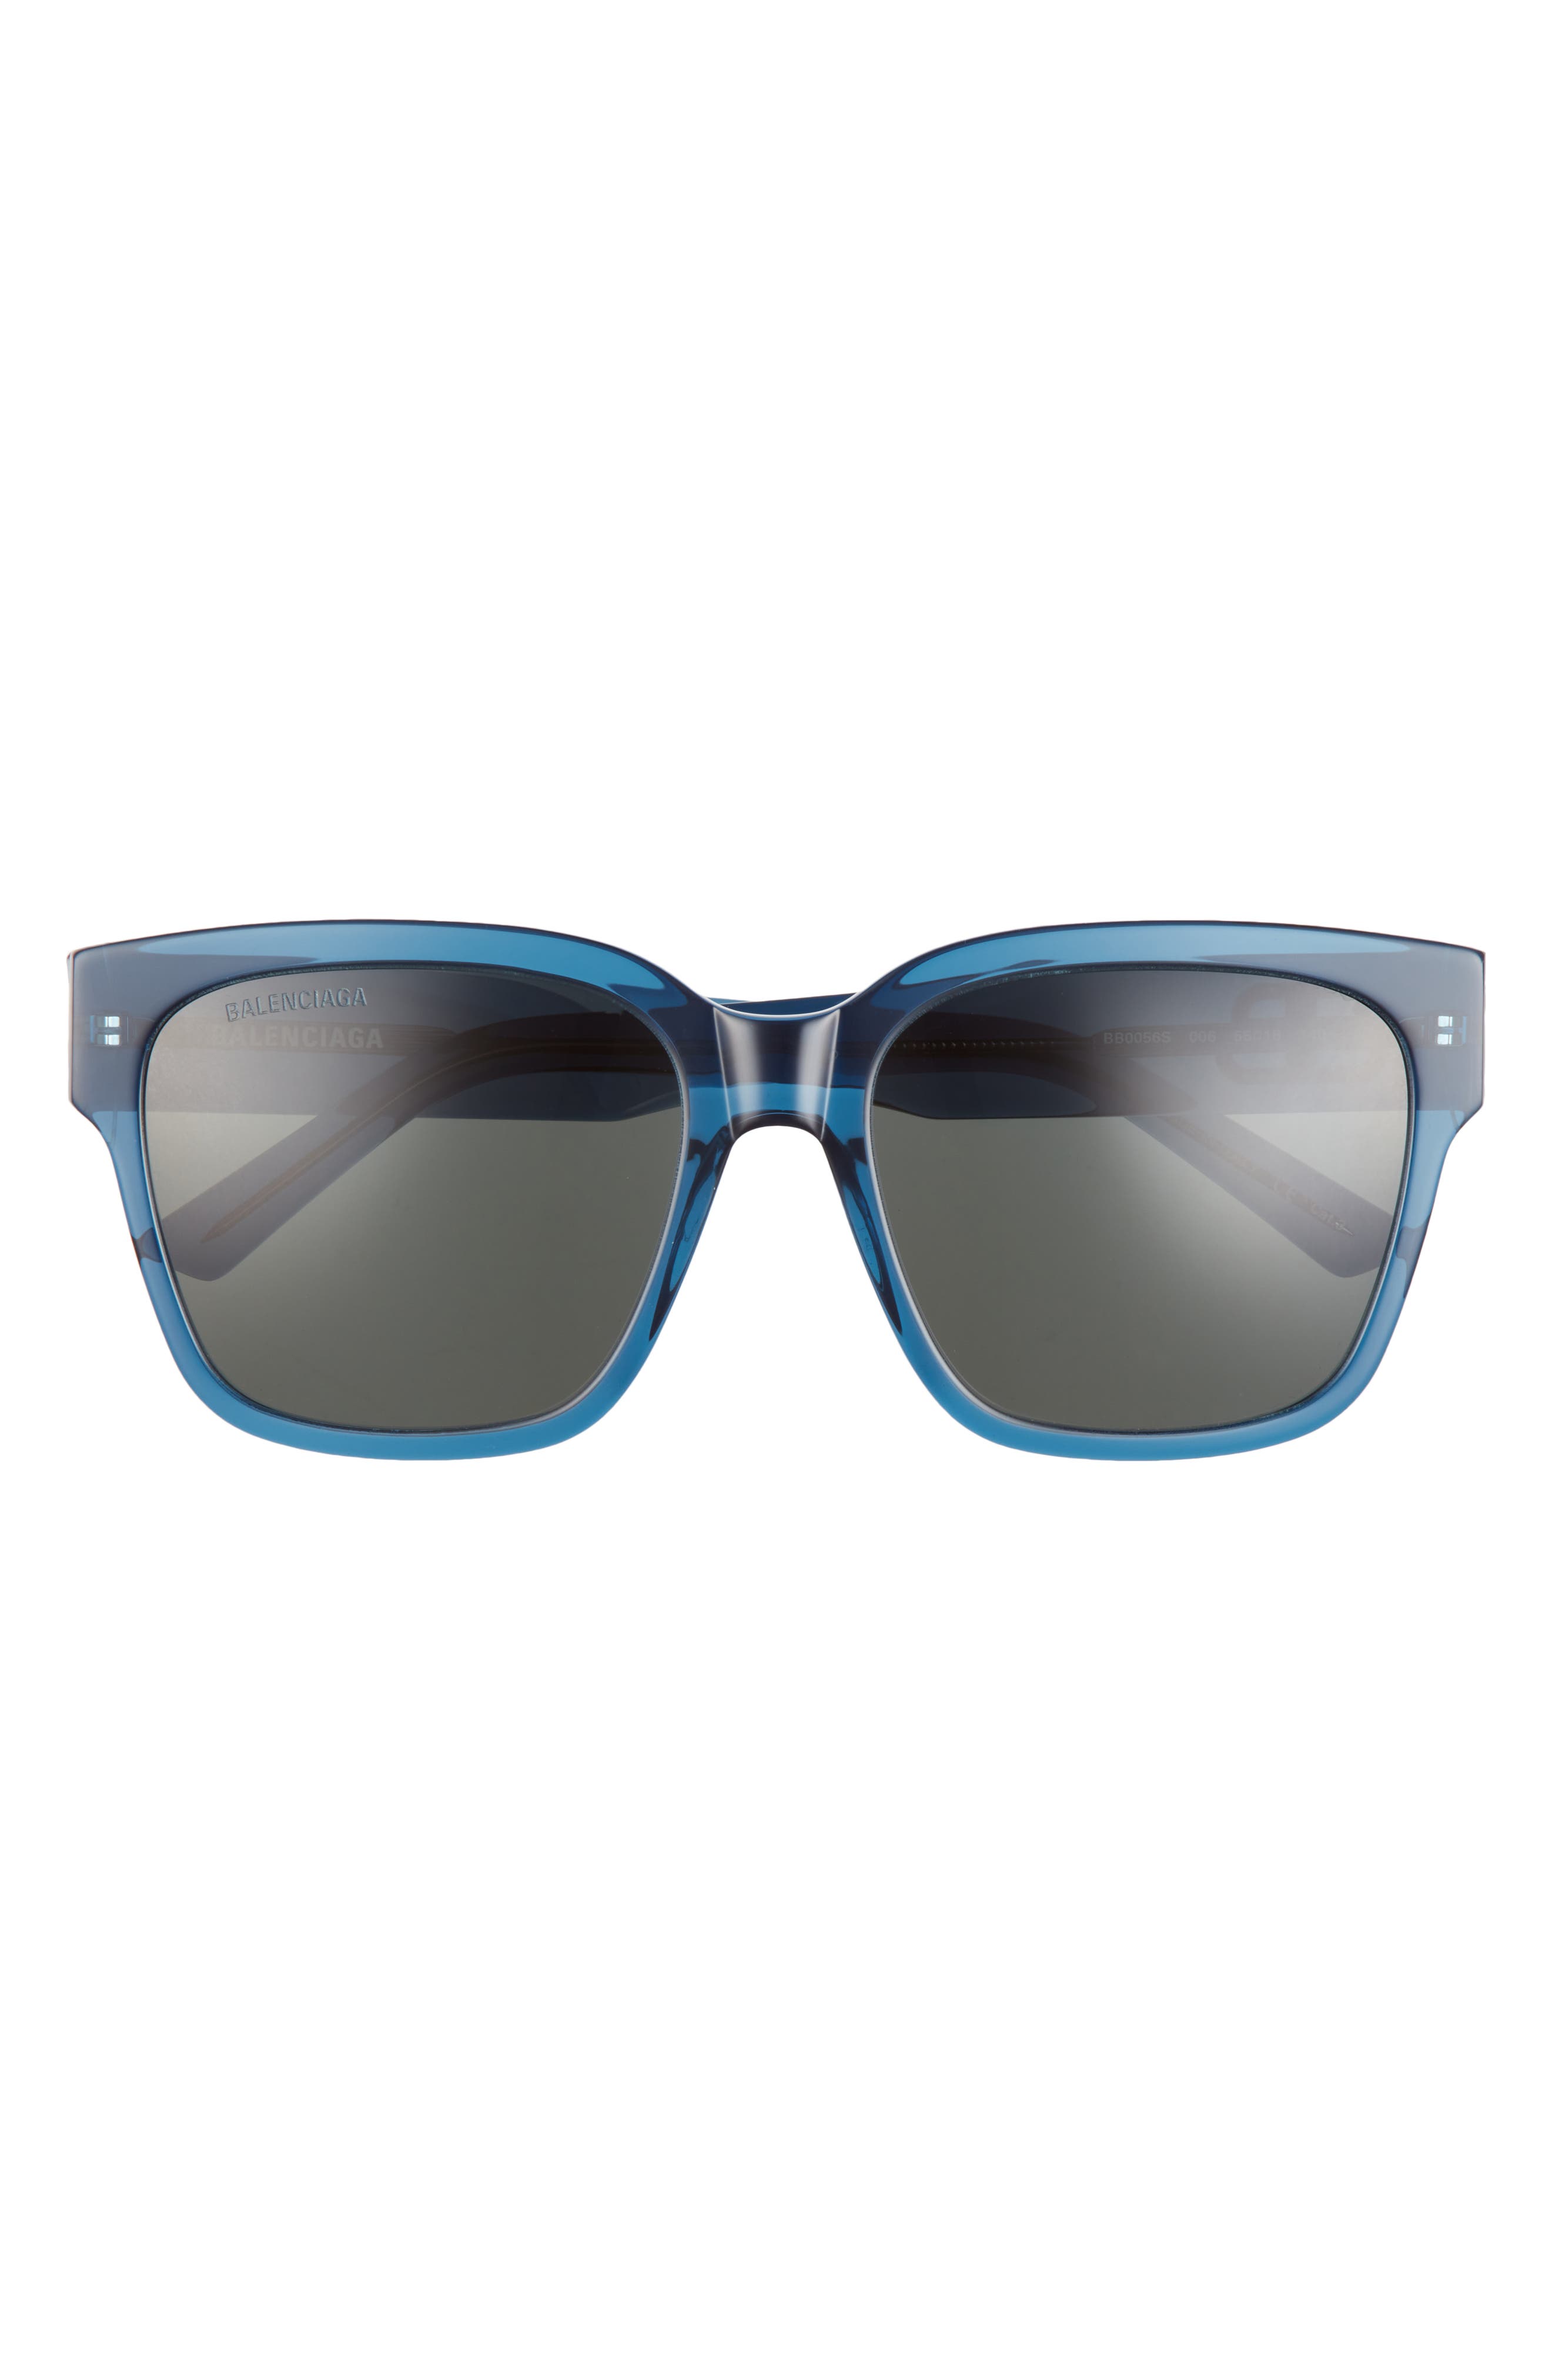 Balenciaga 55mm Square Sunglasses in Blue at Nordstrom